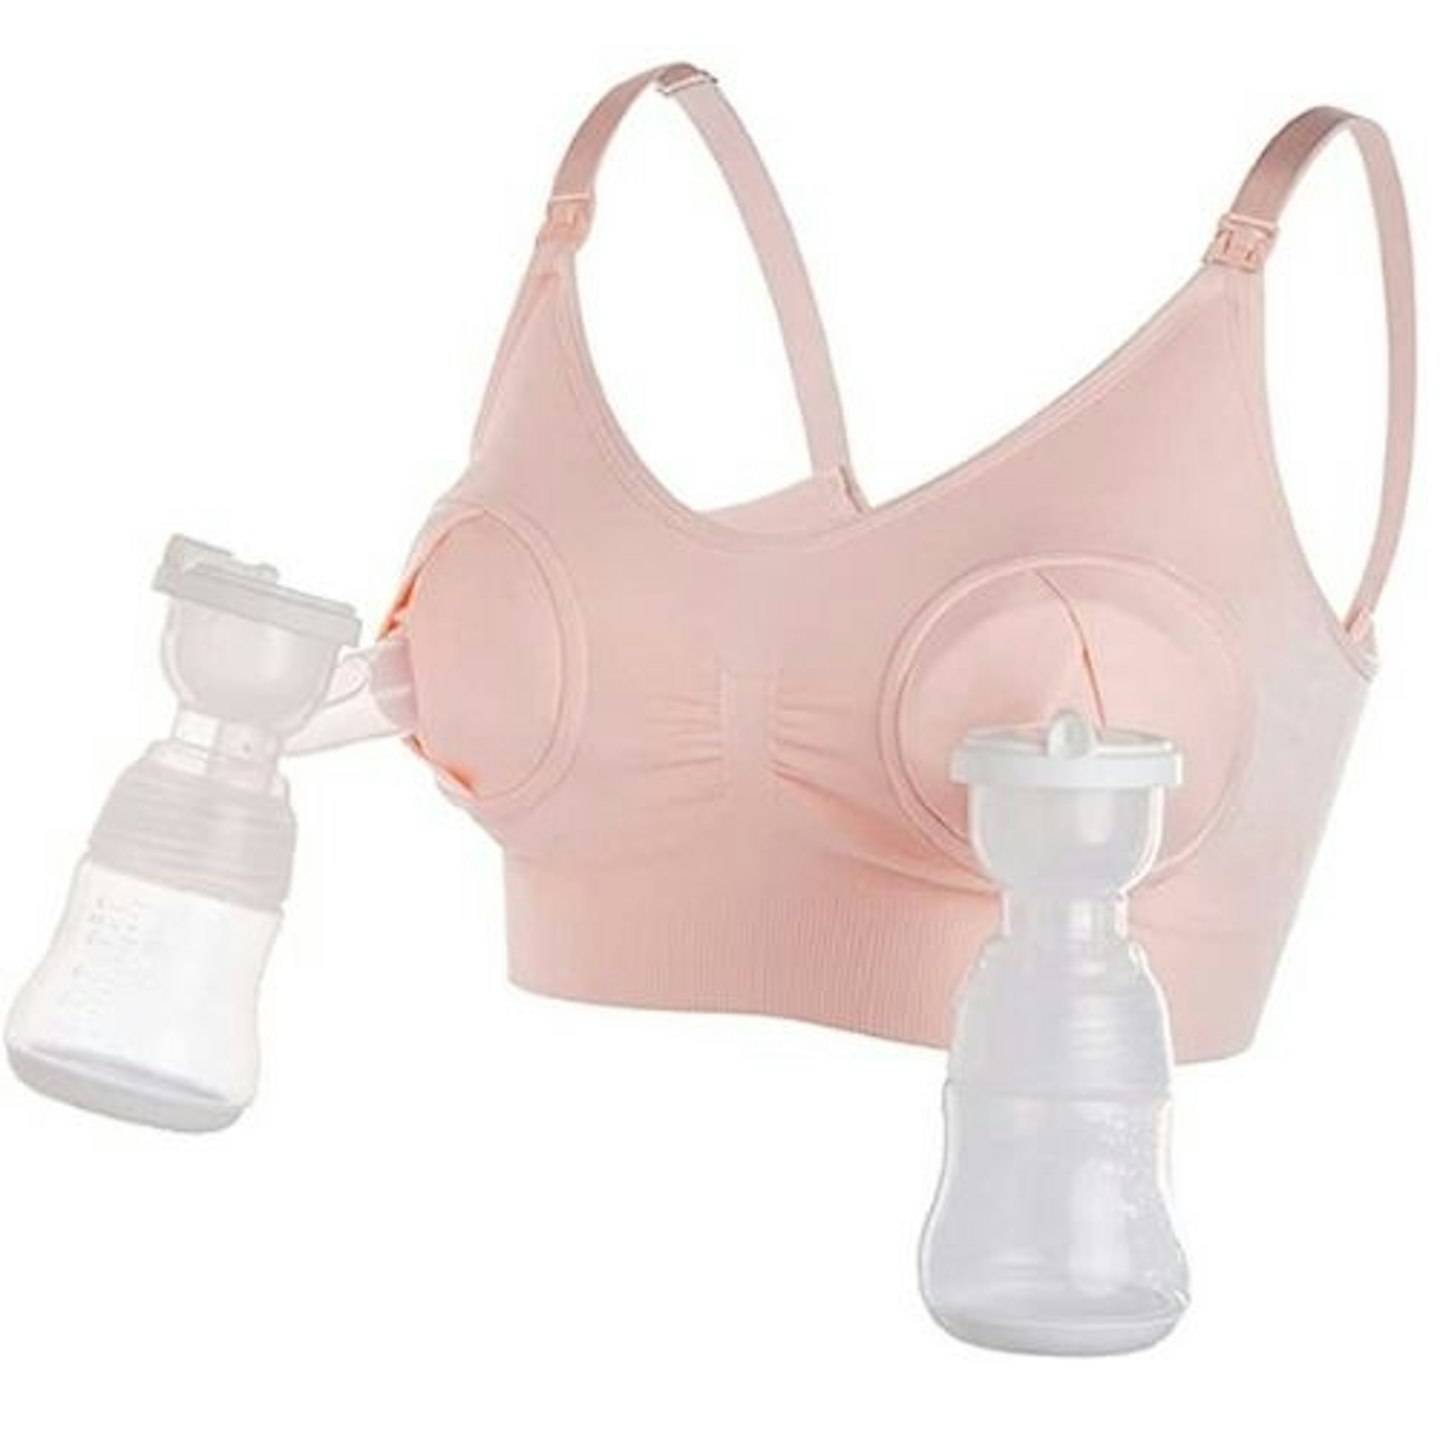 Best pumping bra LEAPOVER Women Hands-Free Breast Pump Bra